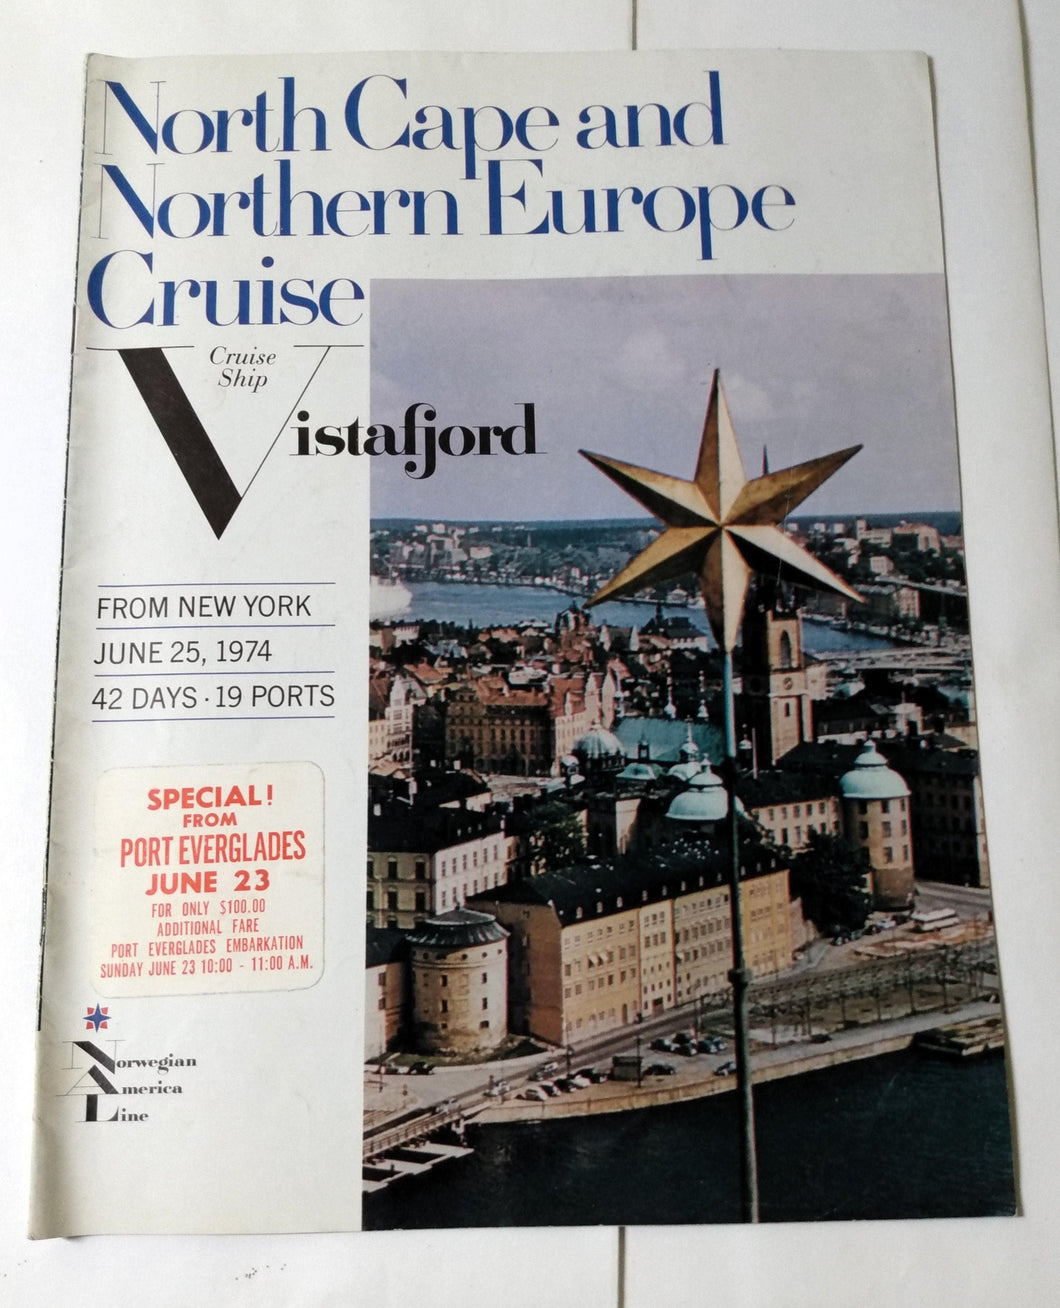 Norwegian America Line Cruise Ship ms Vistafjord 1974 Cruise Brochure - TulipStuff